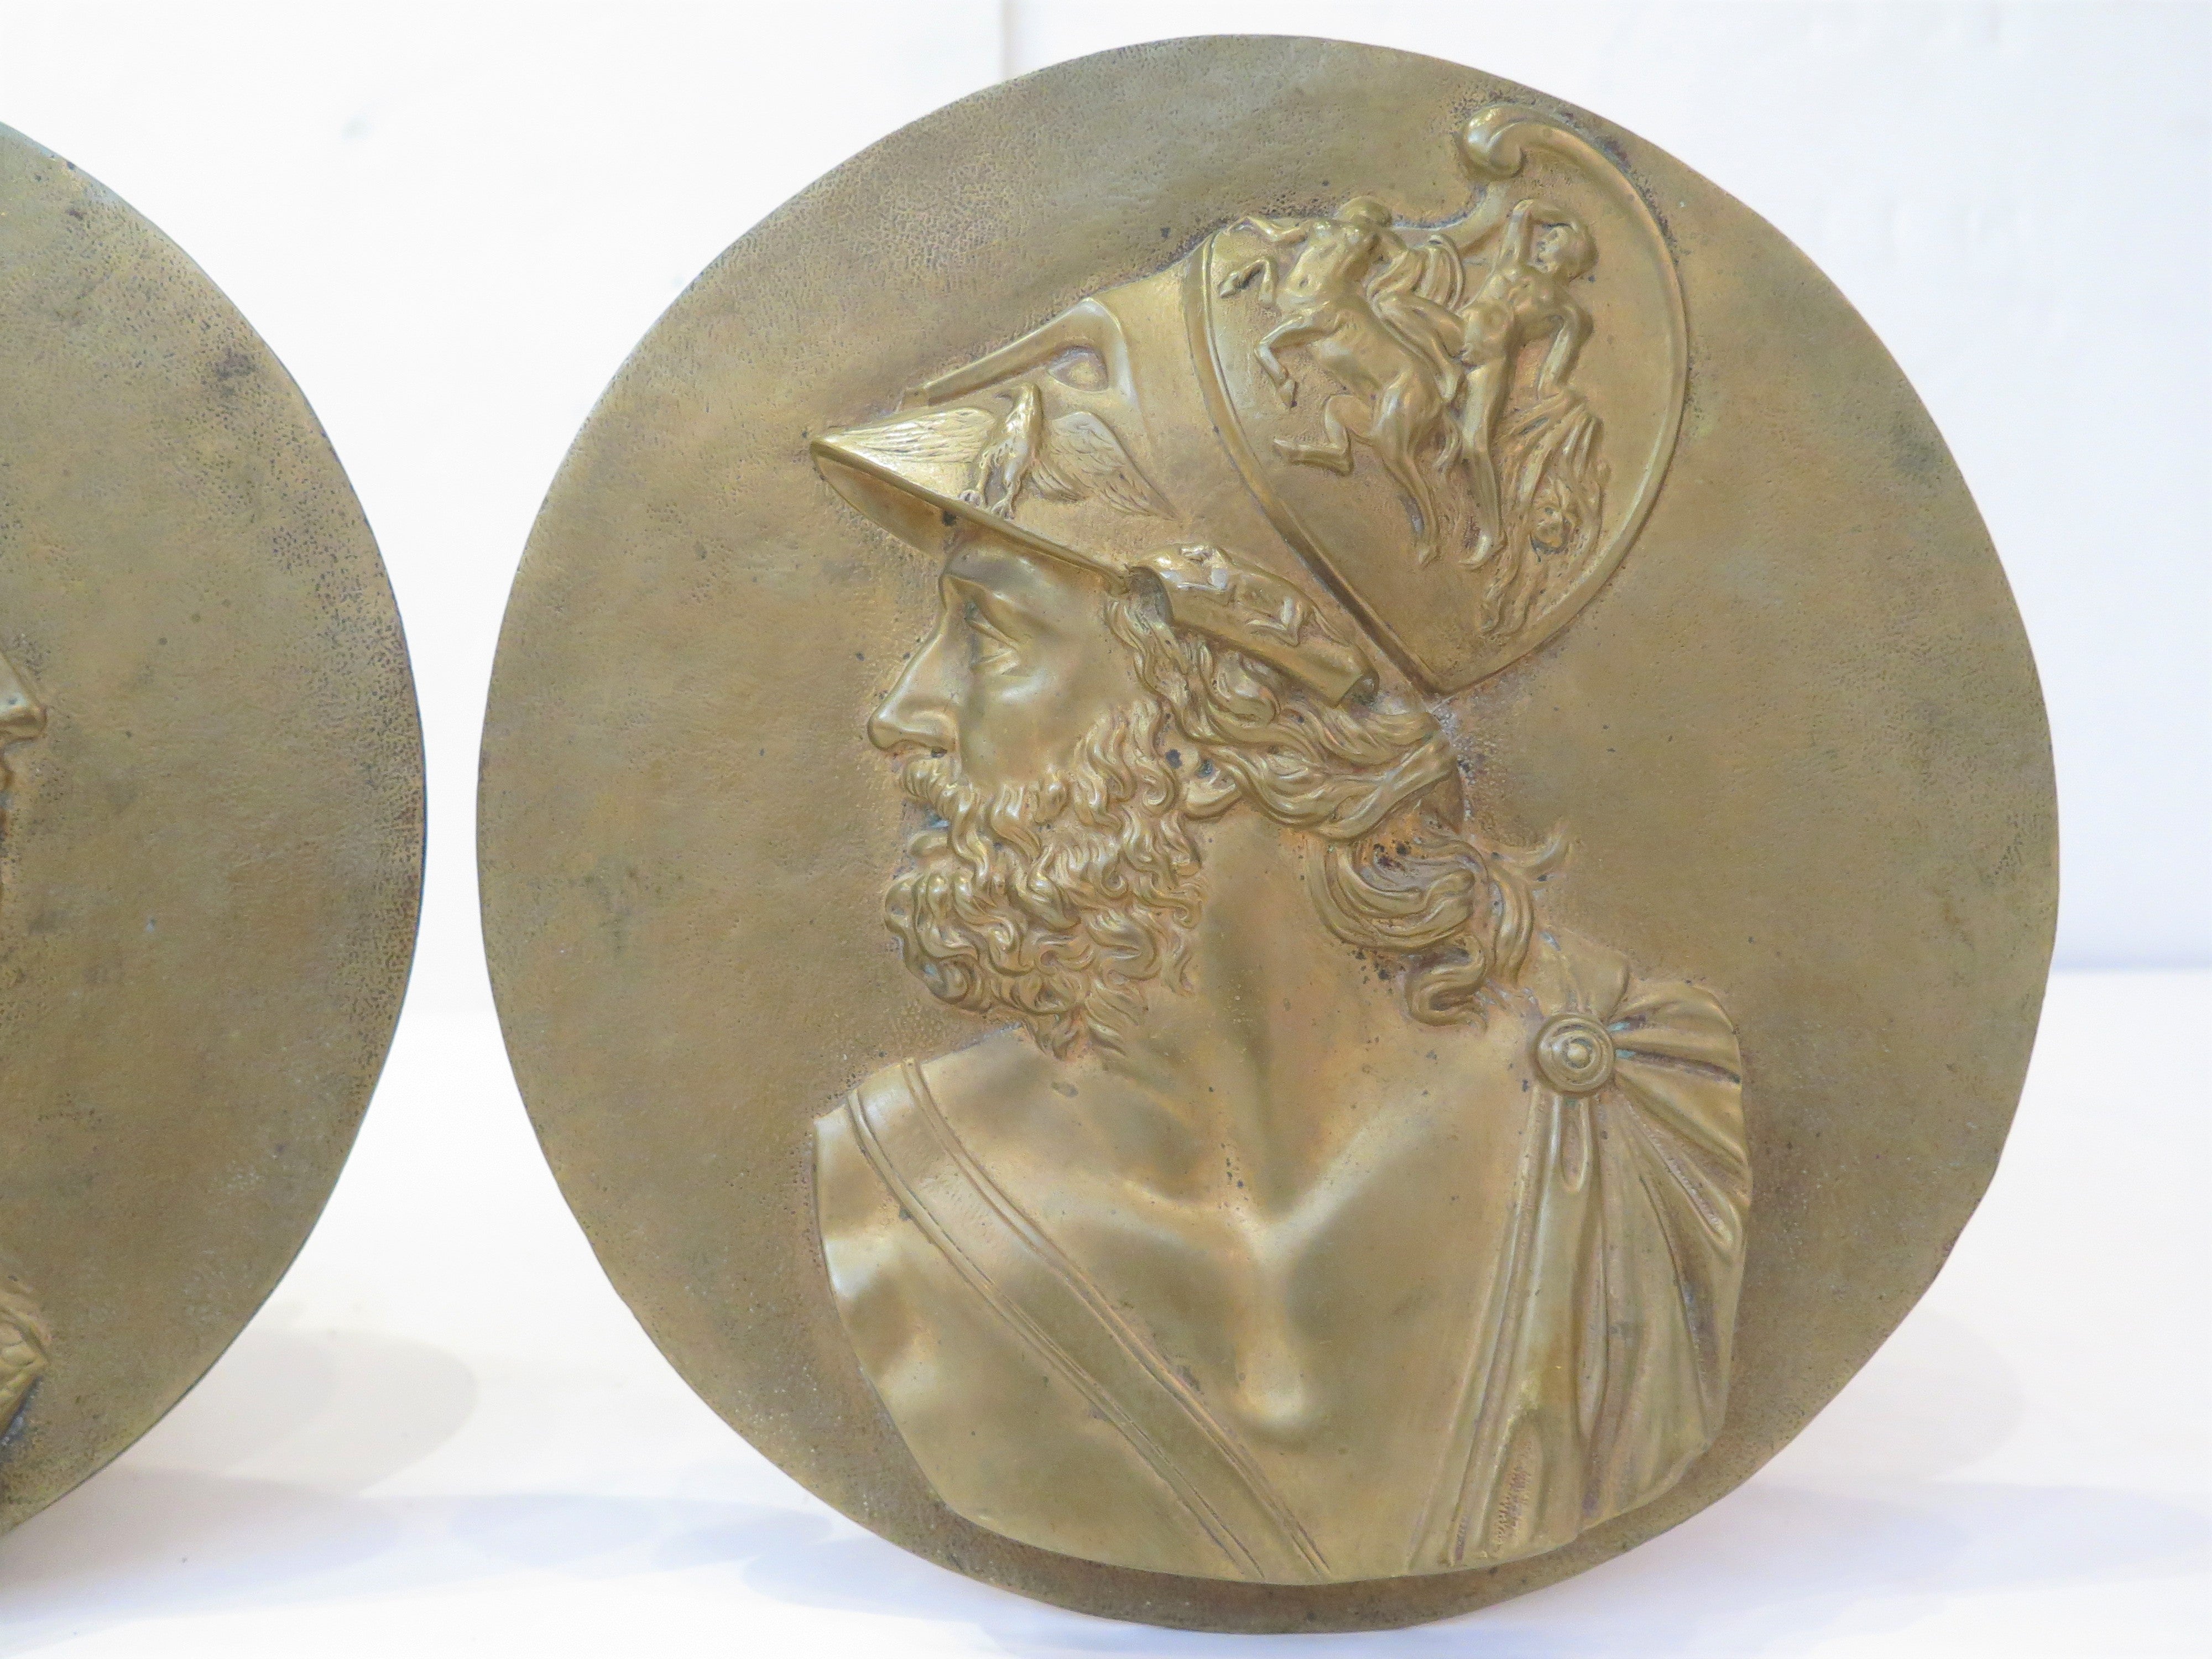 Grand Tour Neoclassical Portrait Medallions / Minerva and Mars